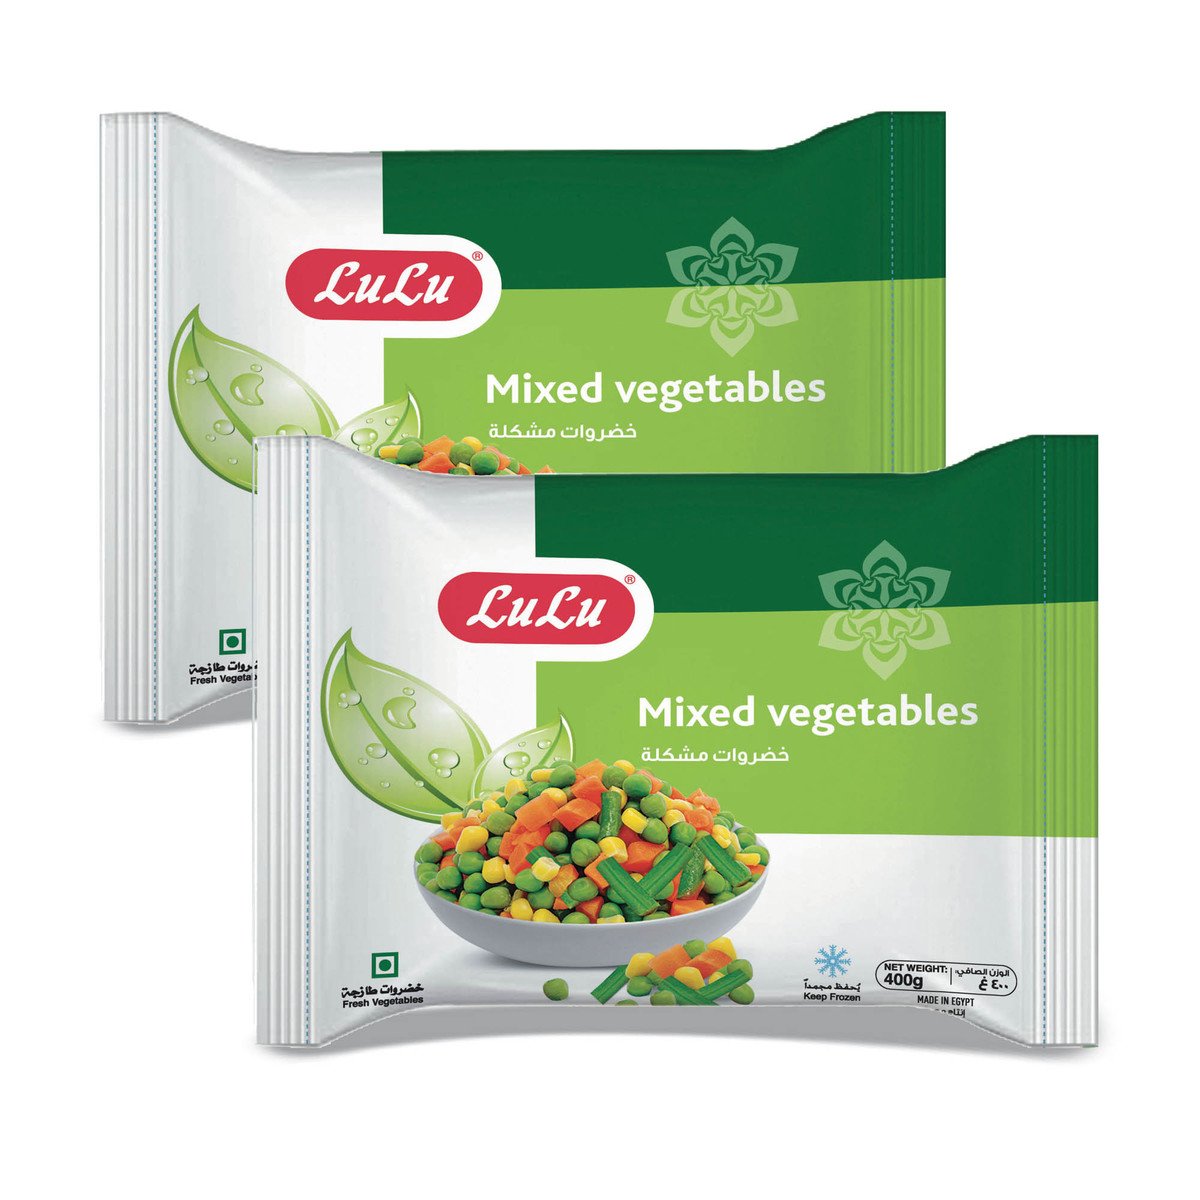 LuLu Frozen Mixed Vegetables Value Pack 2 x 400 g